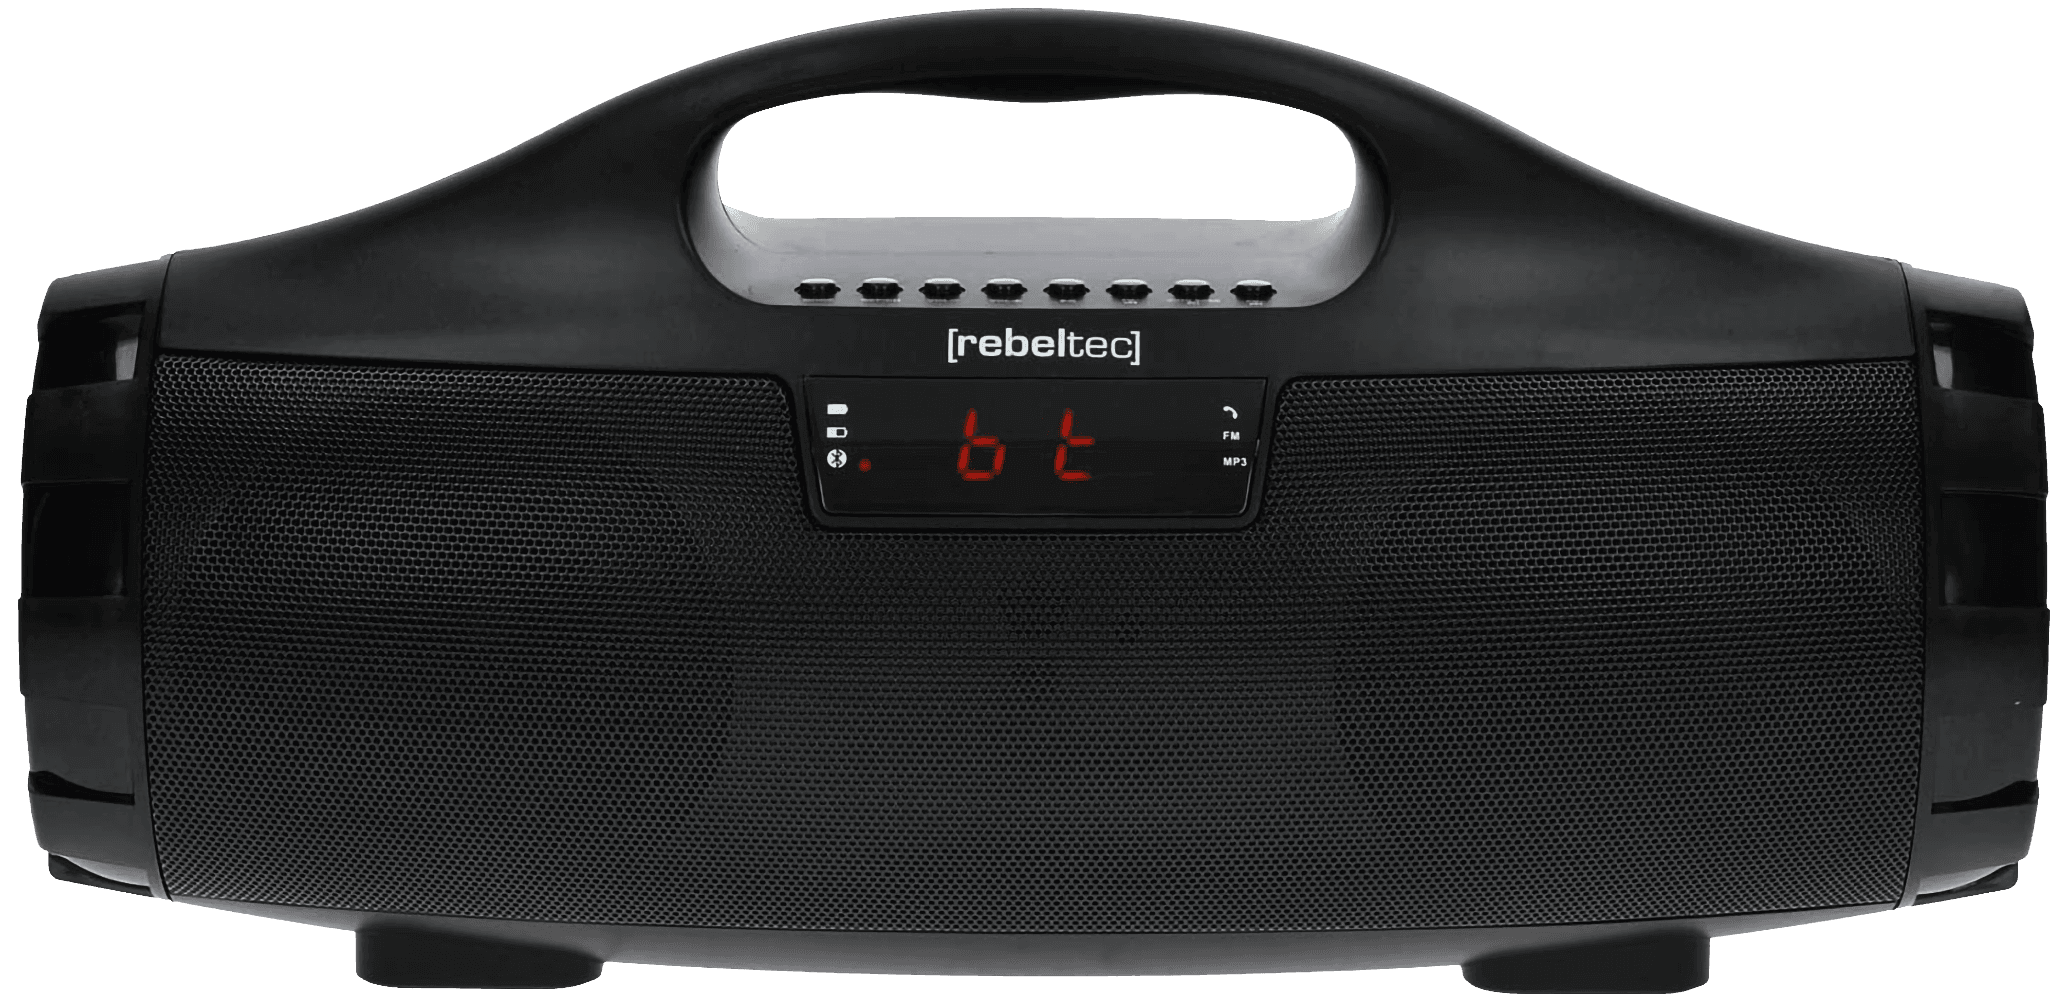 Motorola Moto Z3 Play kompatibilis bluetooth hangszóró Rebeltec Soundbox 390 fekete